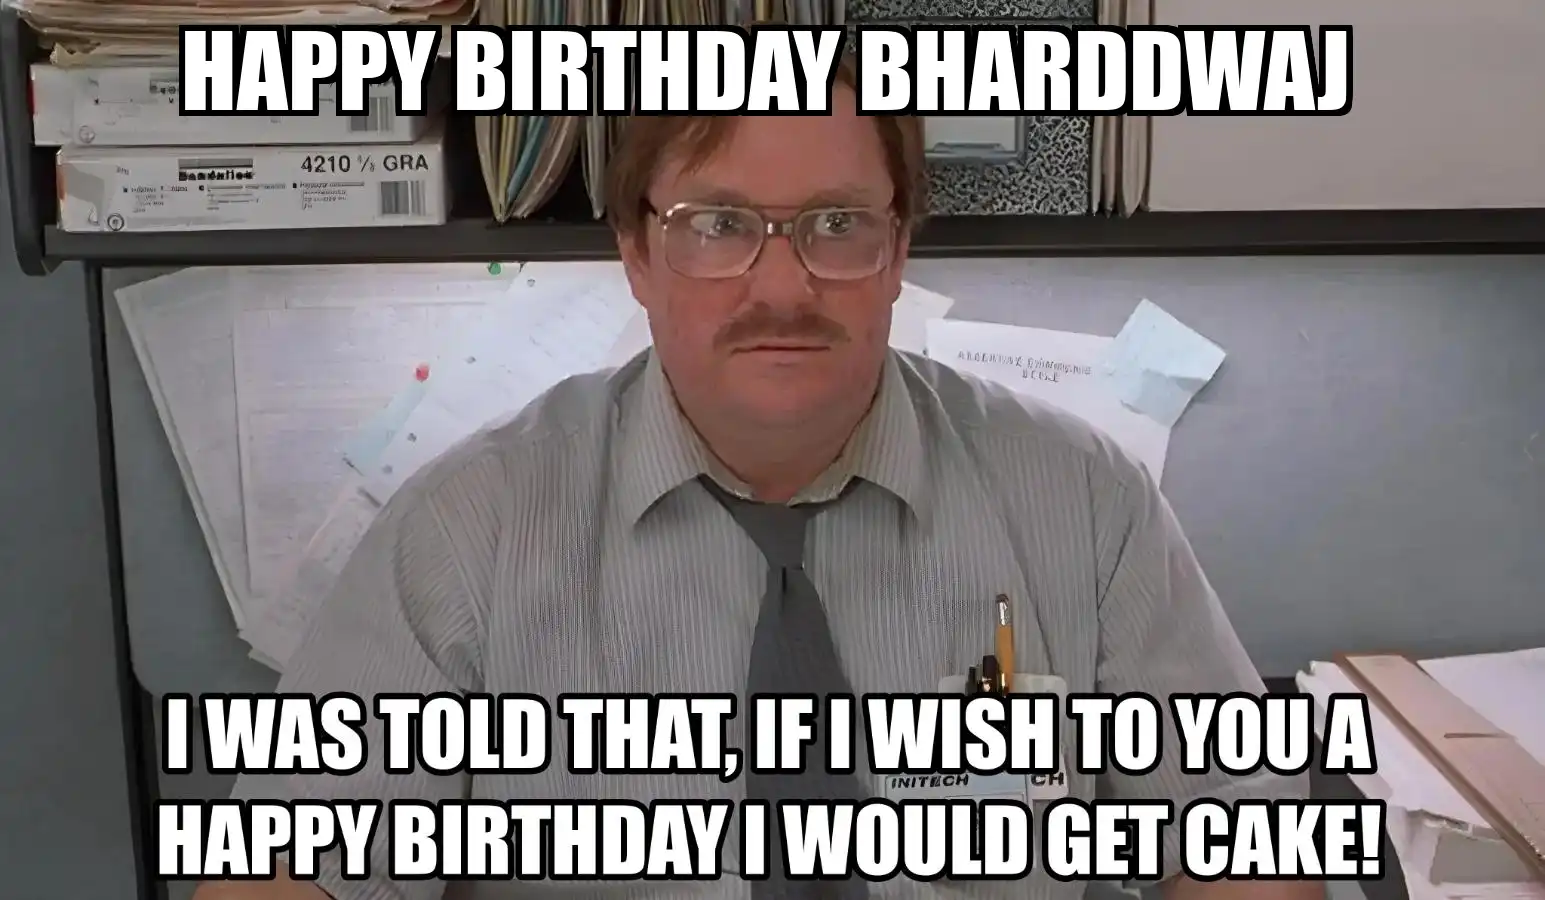 Happy Birthday Bharddwaj I Would Get A Cake Meme